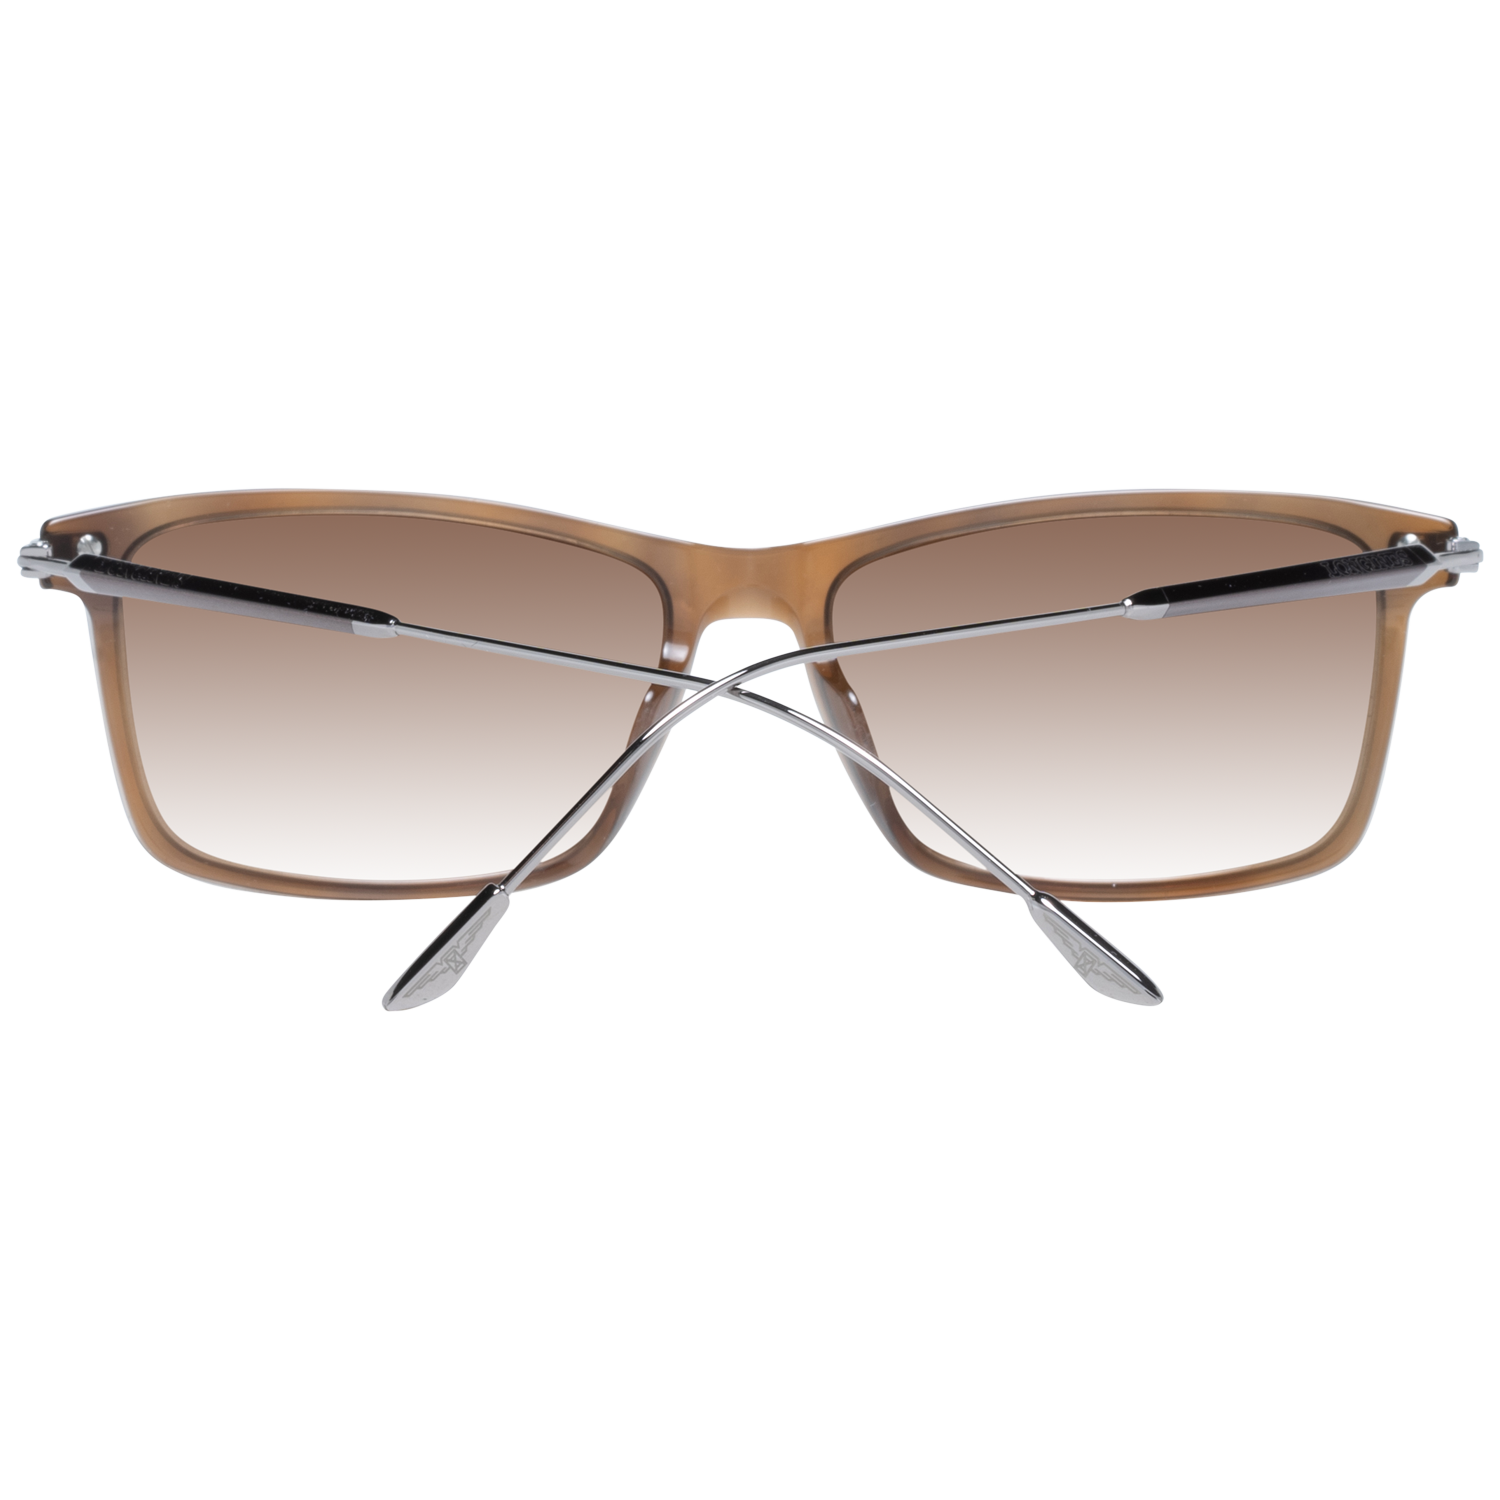 Longines Sunglasses Longines Sunglasses LG0023 56F 58mm Eyeglasses Eyewear UK USA Australia 